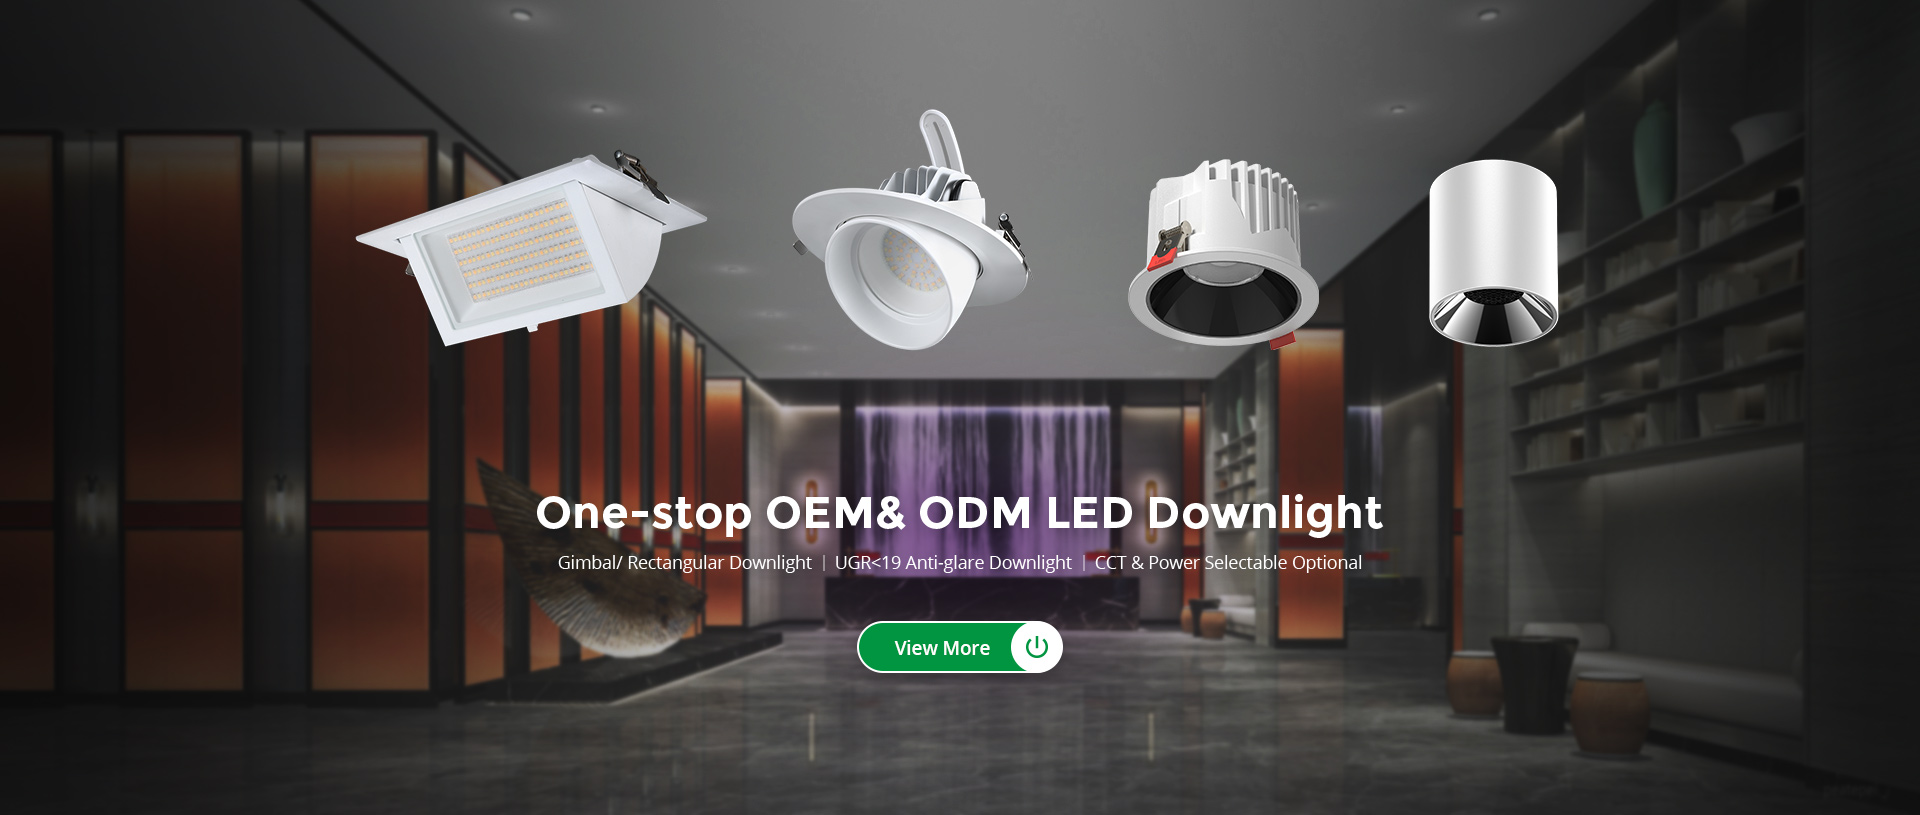 One-stop OEM & ODM LED Downlight Supplier - Gimbal/ Rectangular Downlight, Anti-Glare, CCT & Power Selectable LED Downlight.